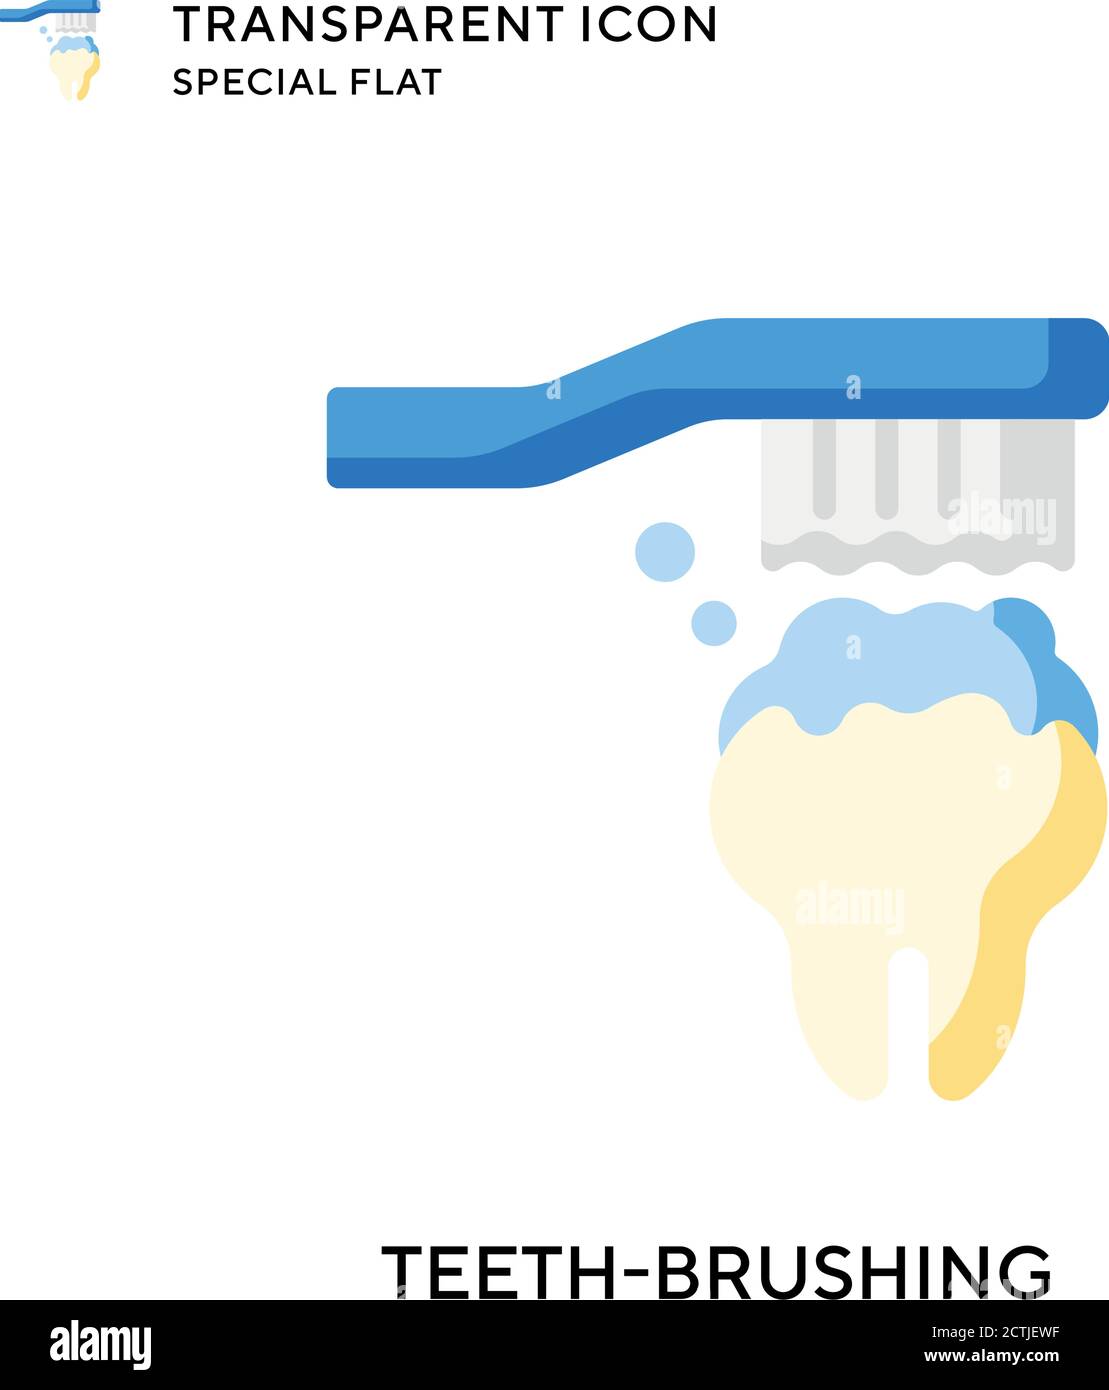 Teeth-brushing vector icon. Flat style illustration. EPS 10 vector. Stock Vector